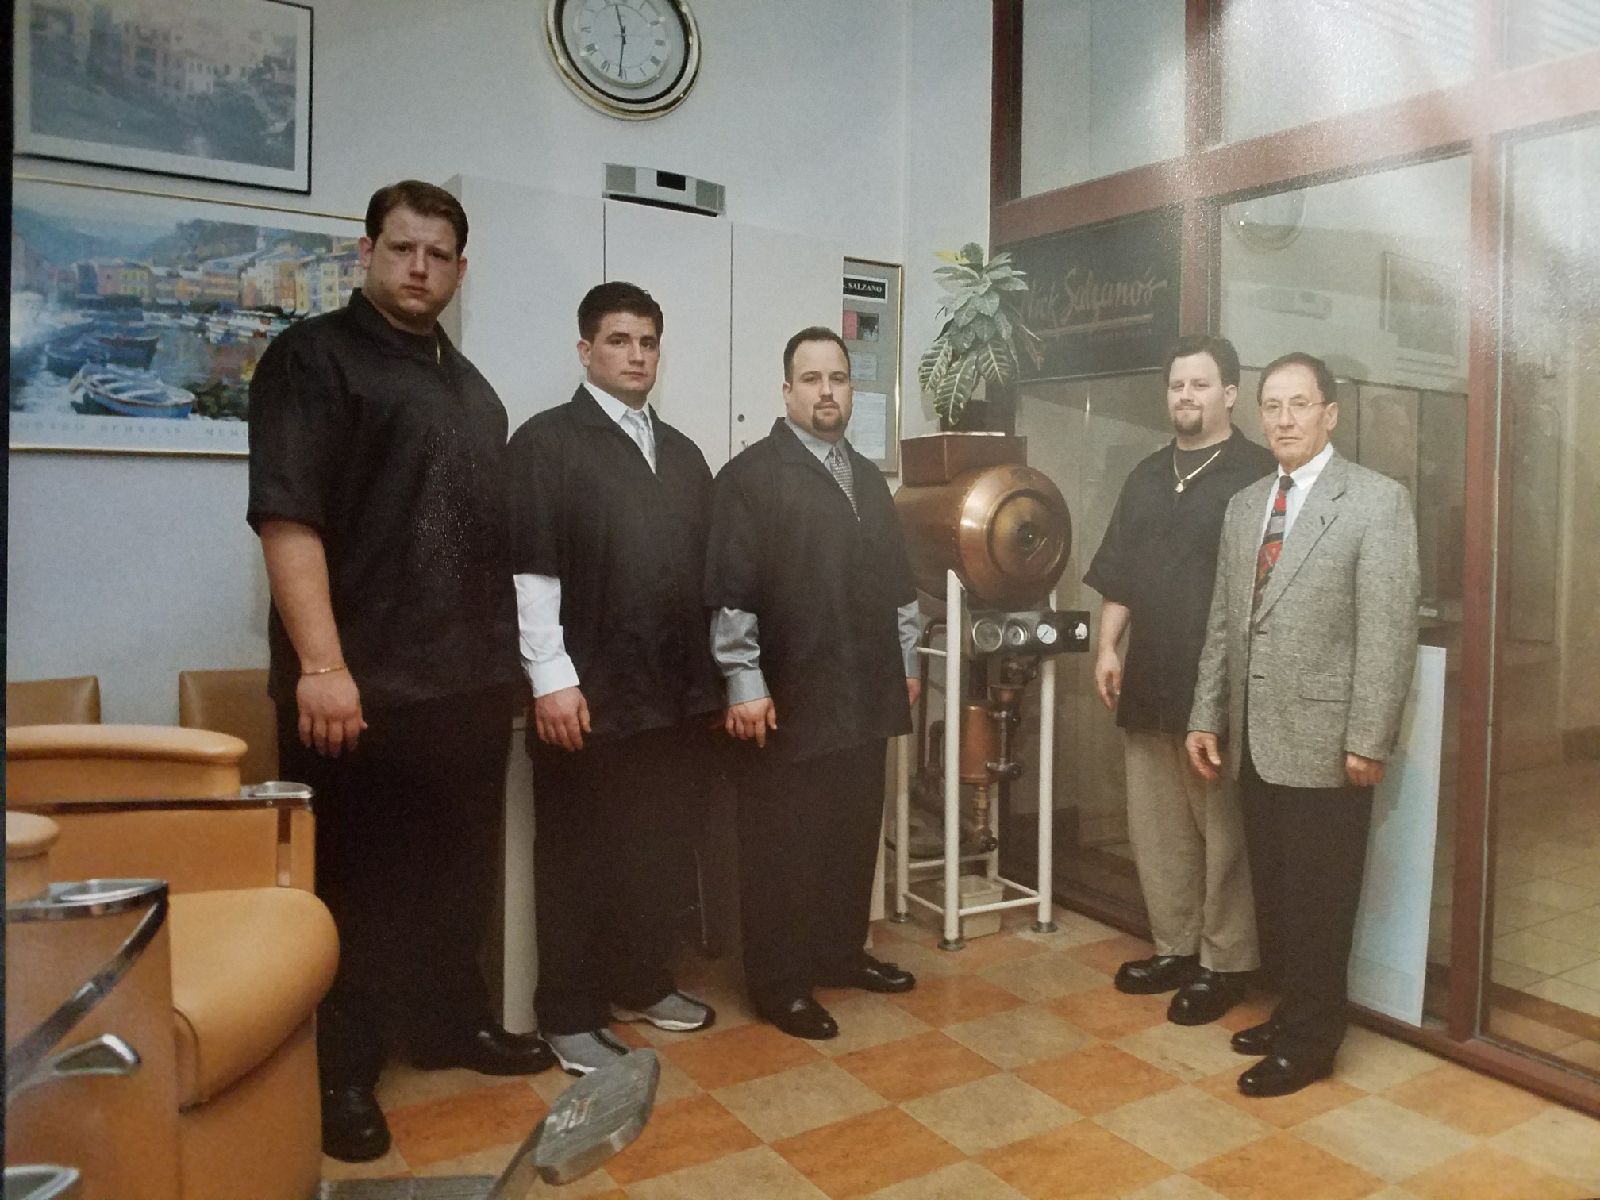 G. Salzano barbering family in Cincinnati father and 3 sons